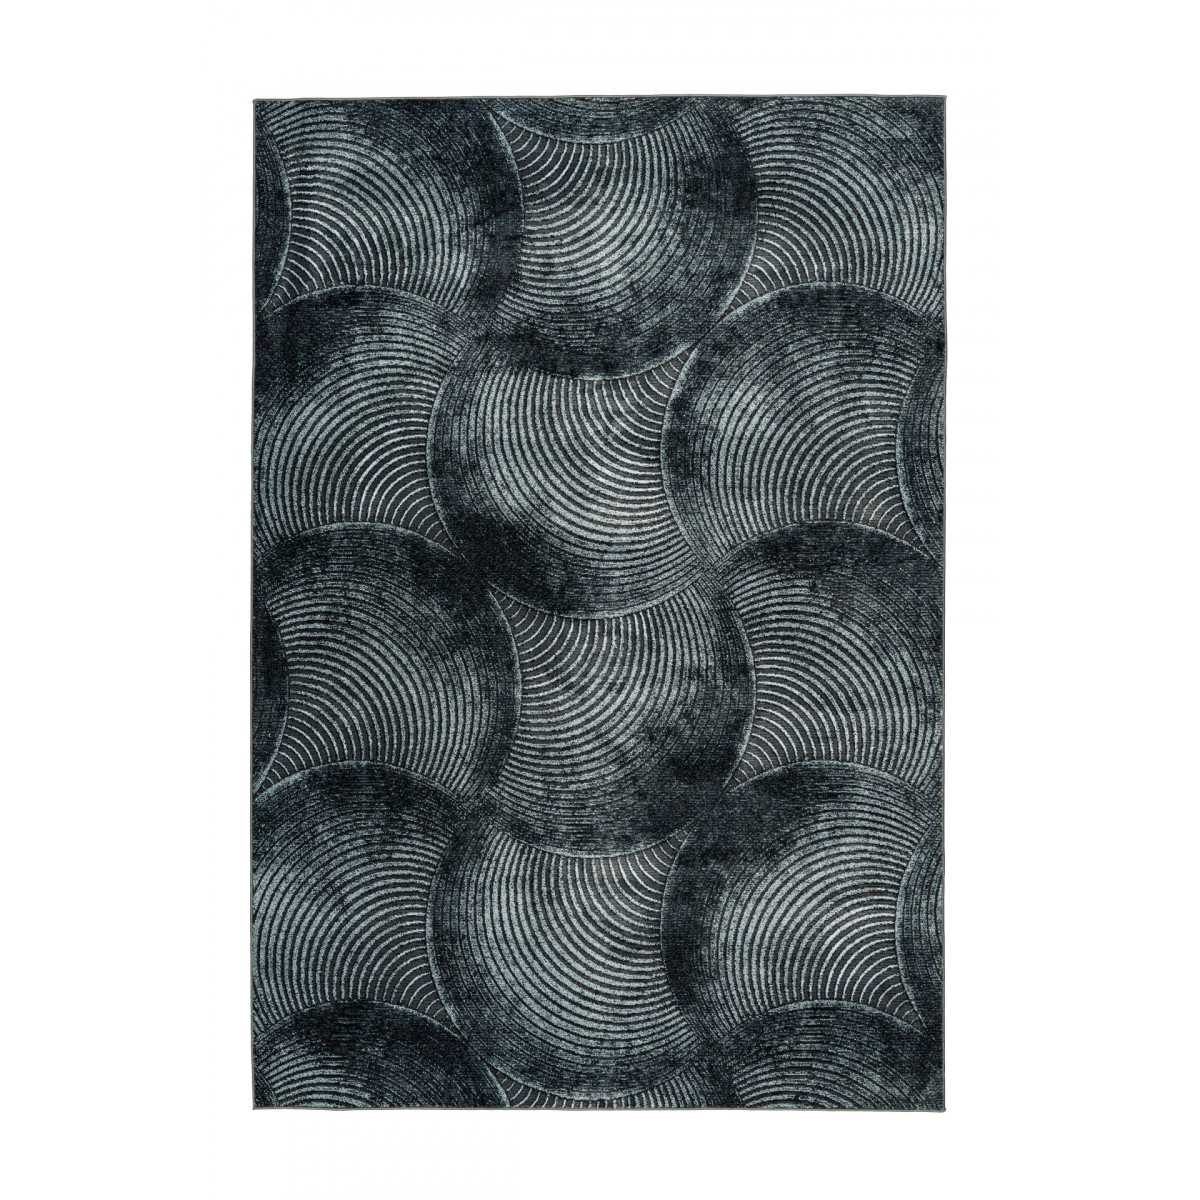 INTERIEUR- DECORATION|Living room rugs GRETA 802LALEECarpet Line LALEE